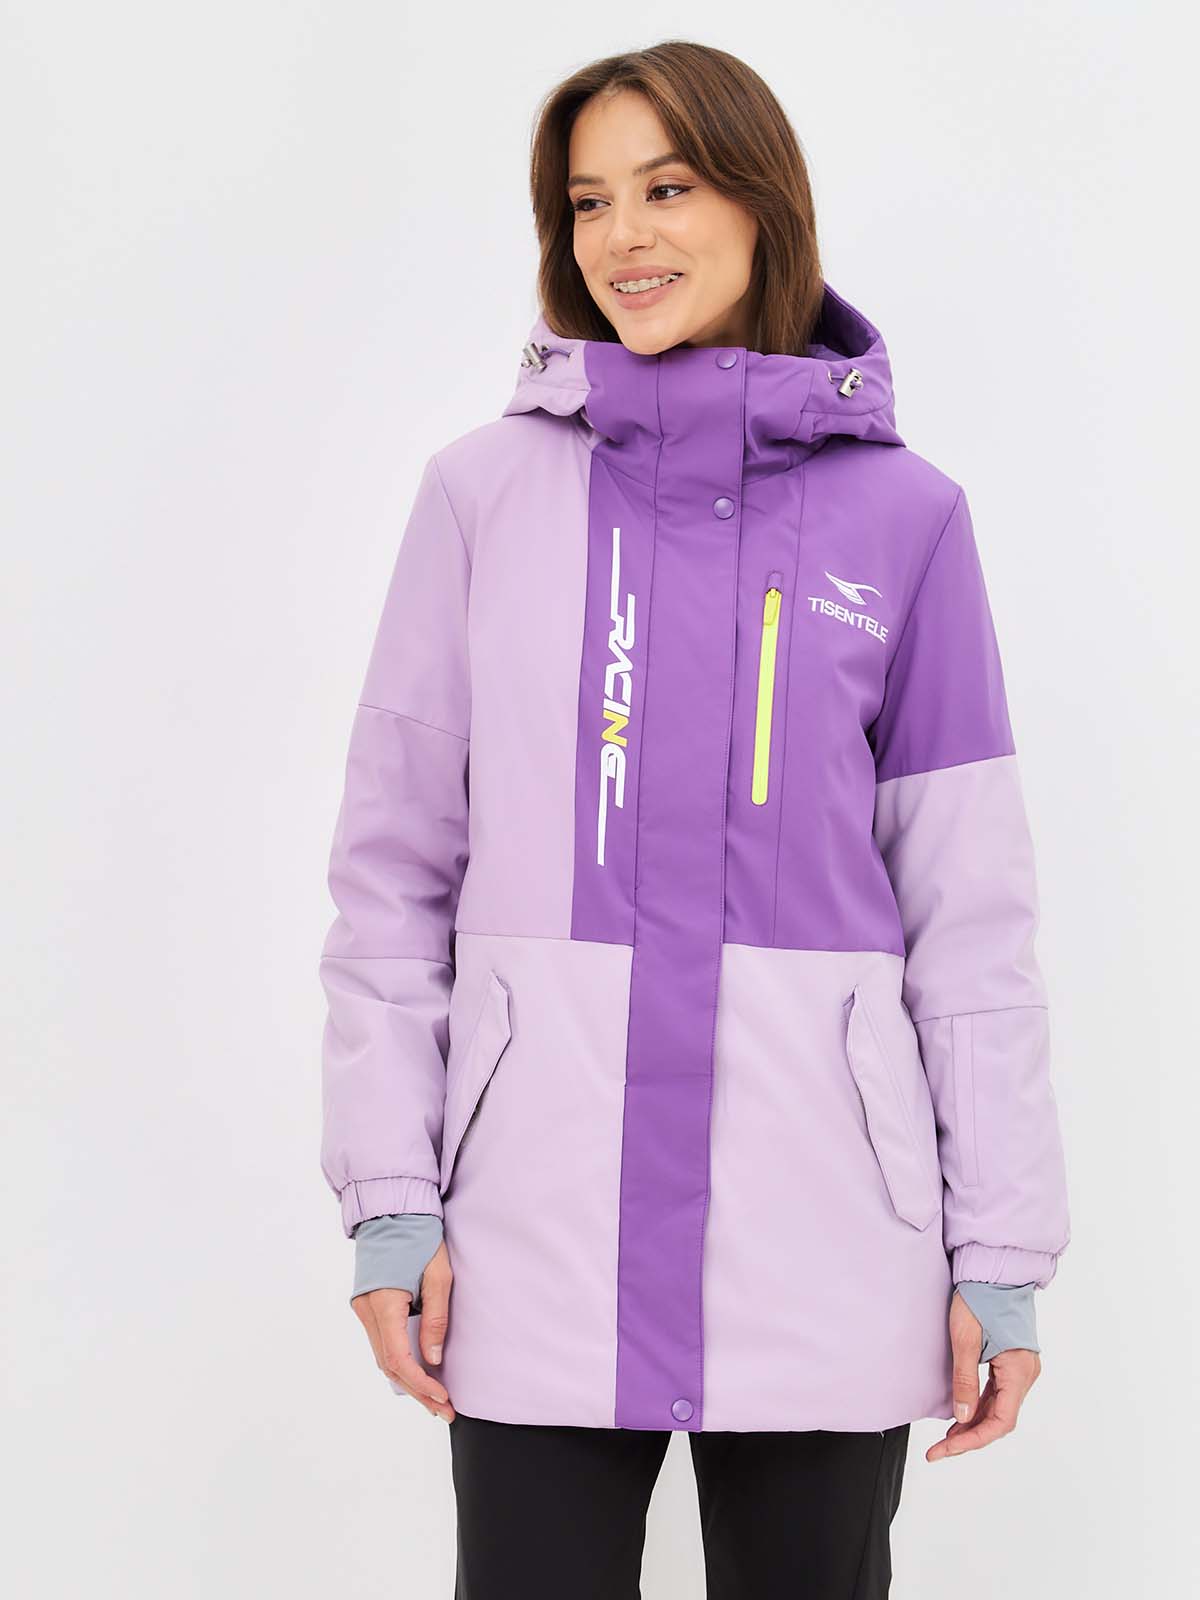 Куртка Tisentele Фиолетовый, 847682 (42, s)